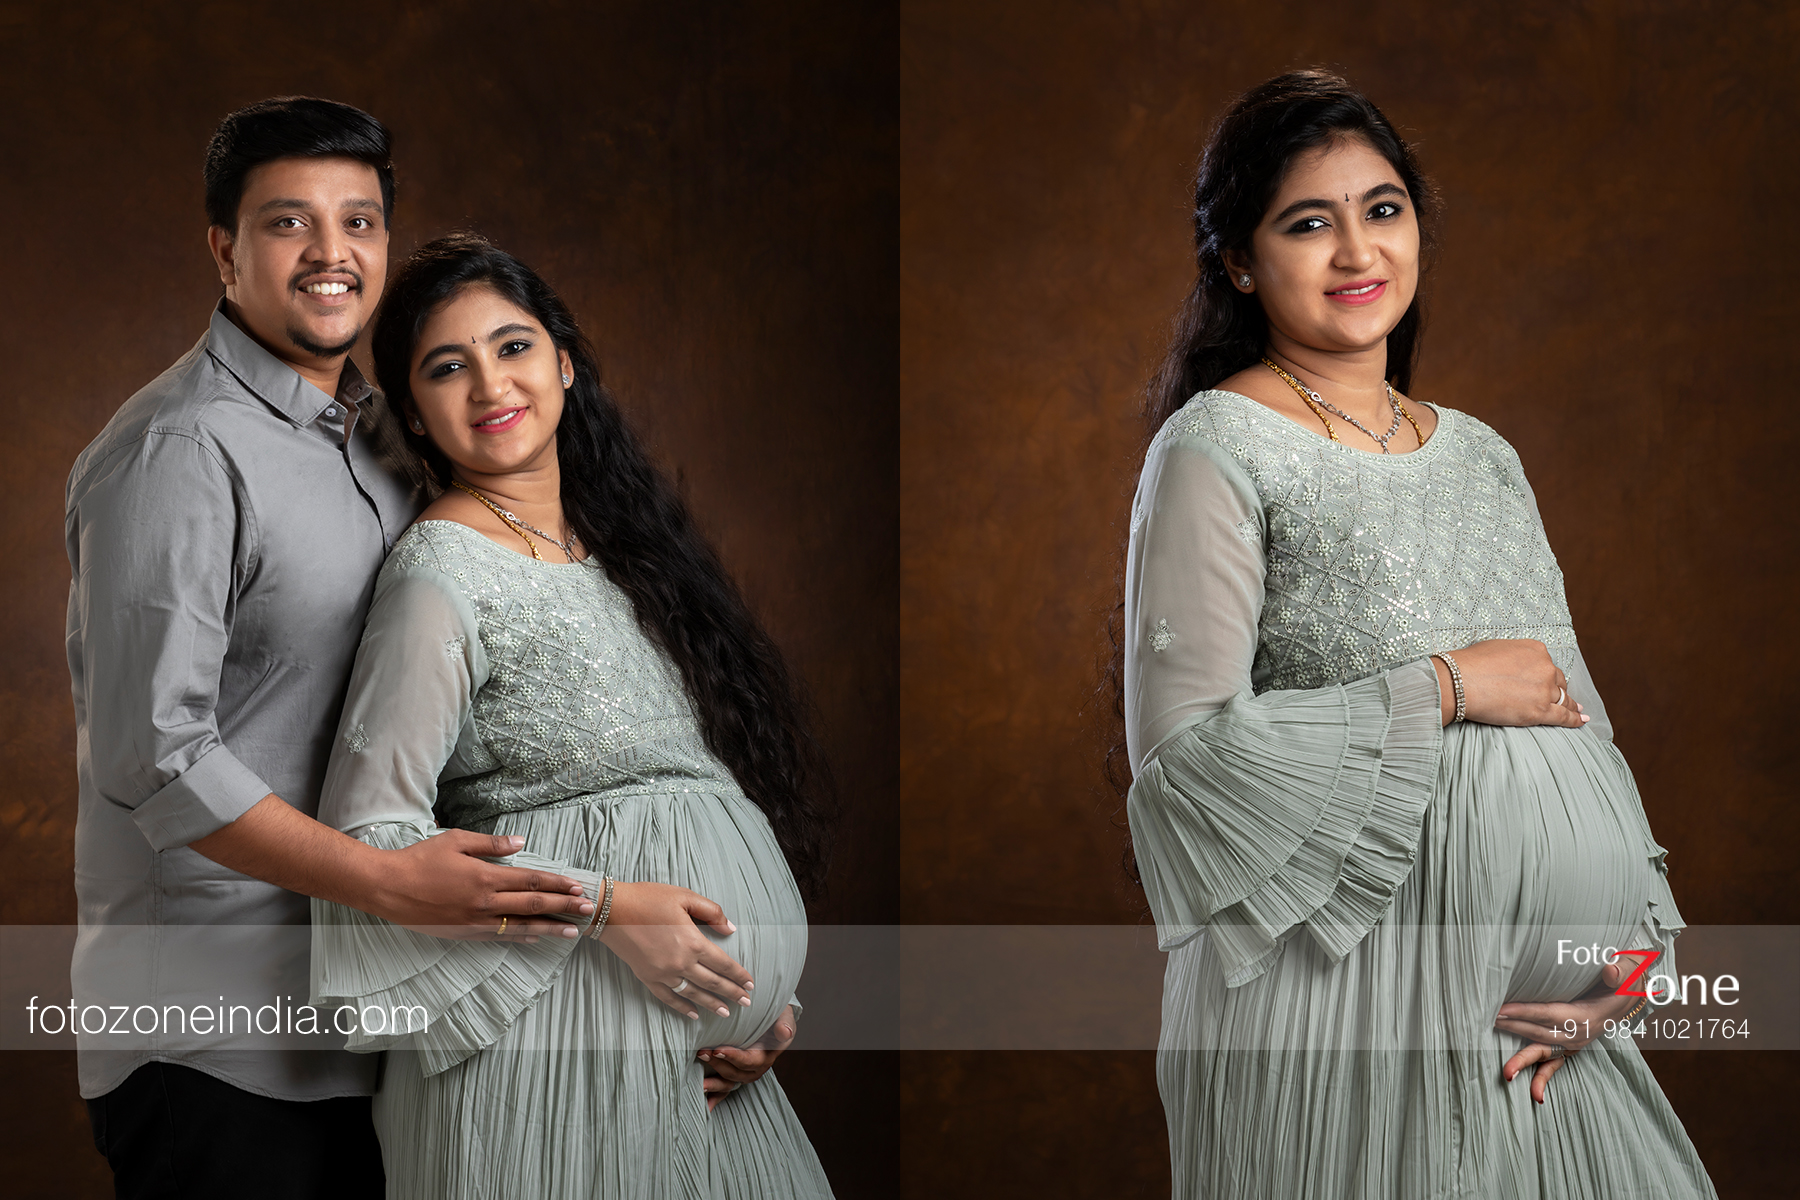 6 Amazing Maternity Photoshoot Ideas for Indian parents